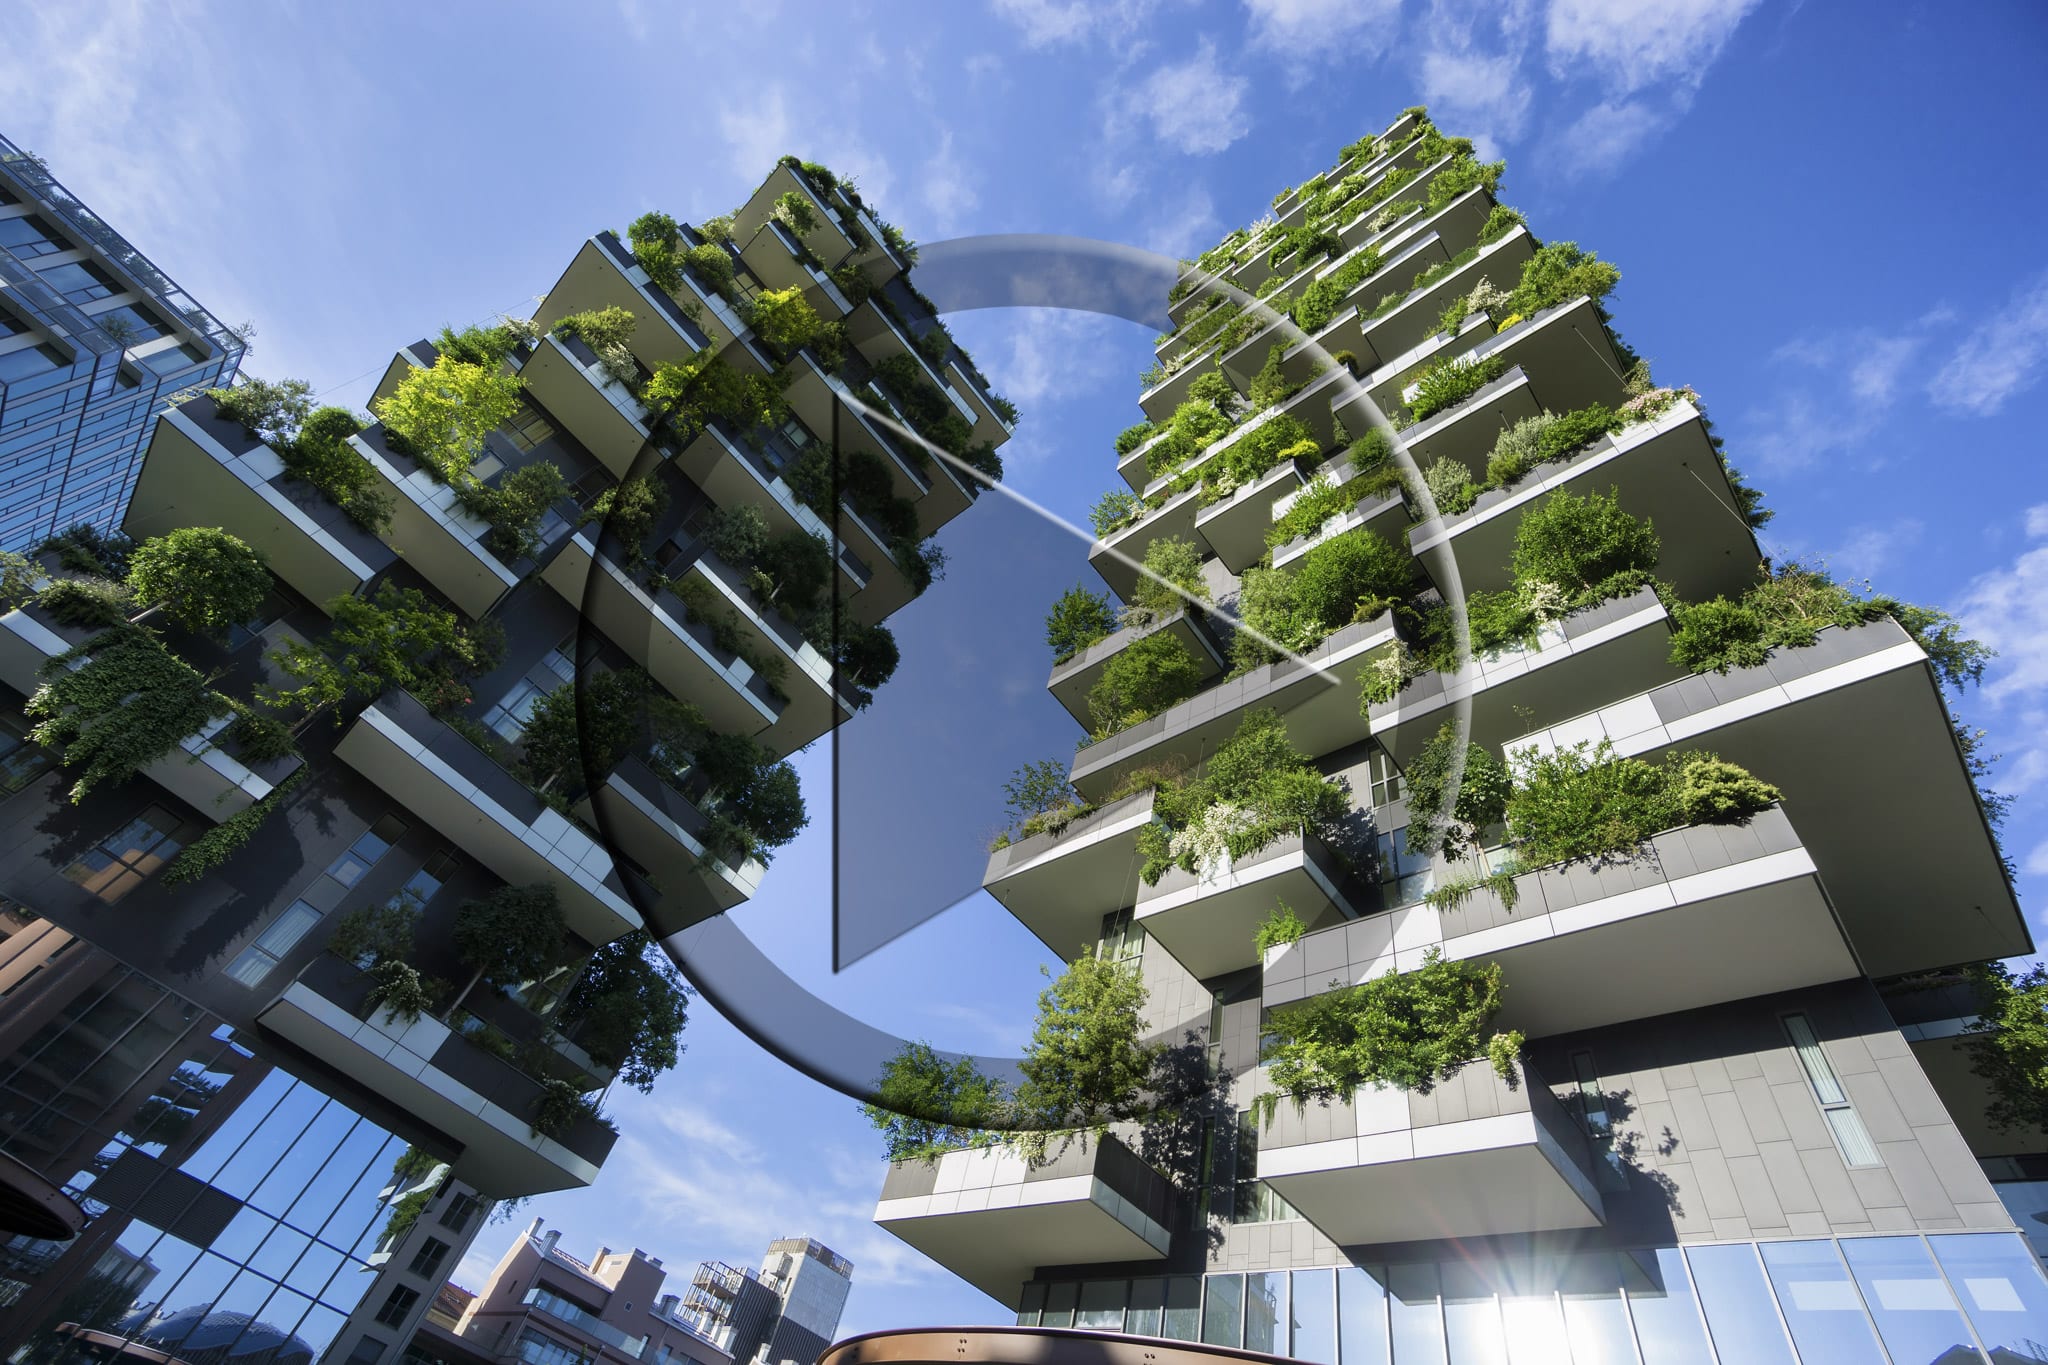 Green Architecture Video